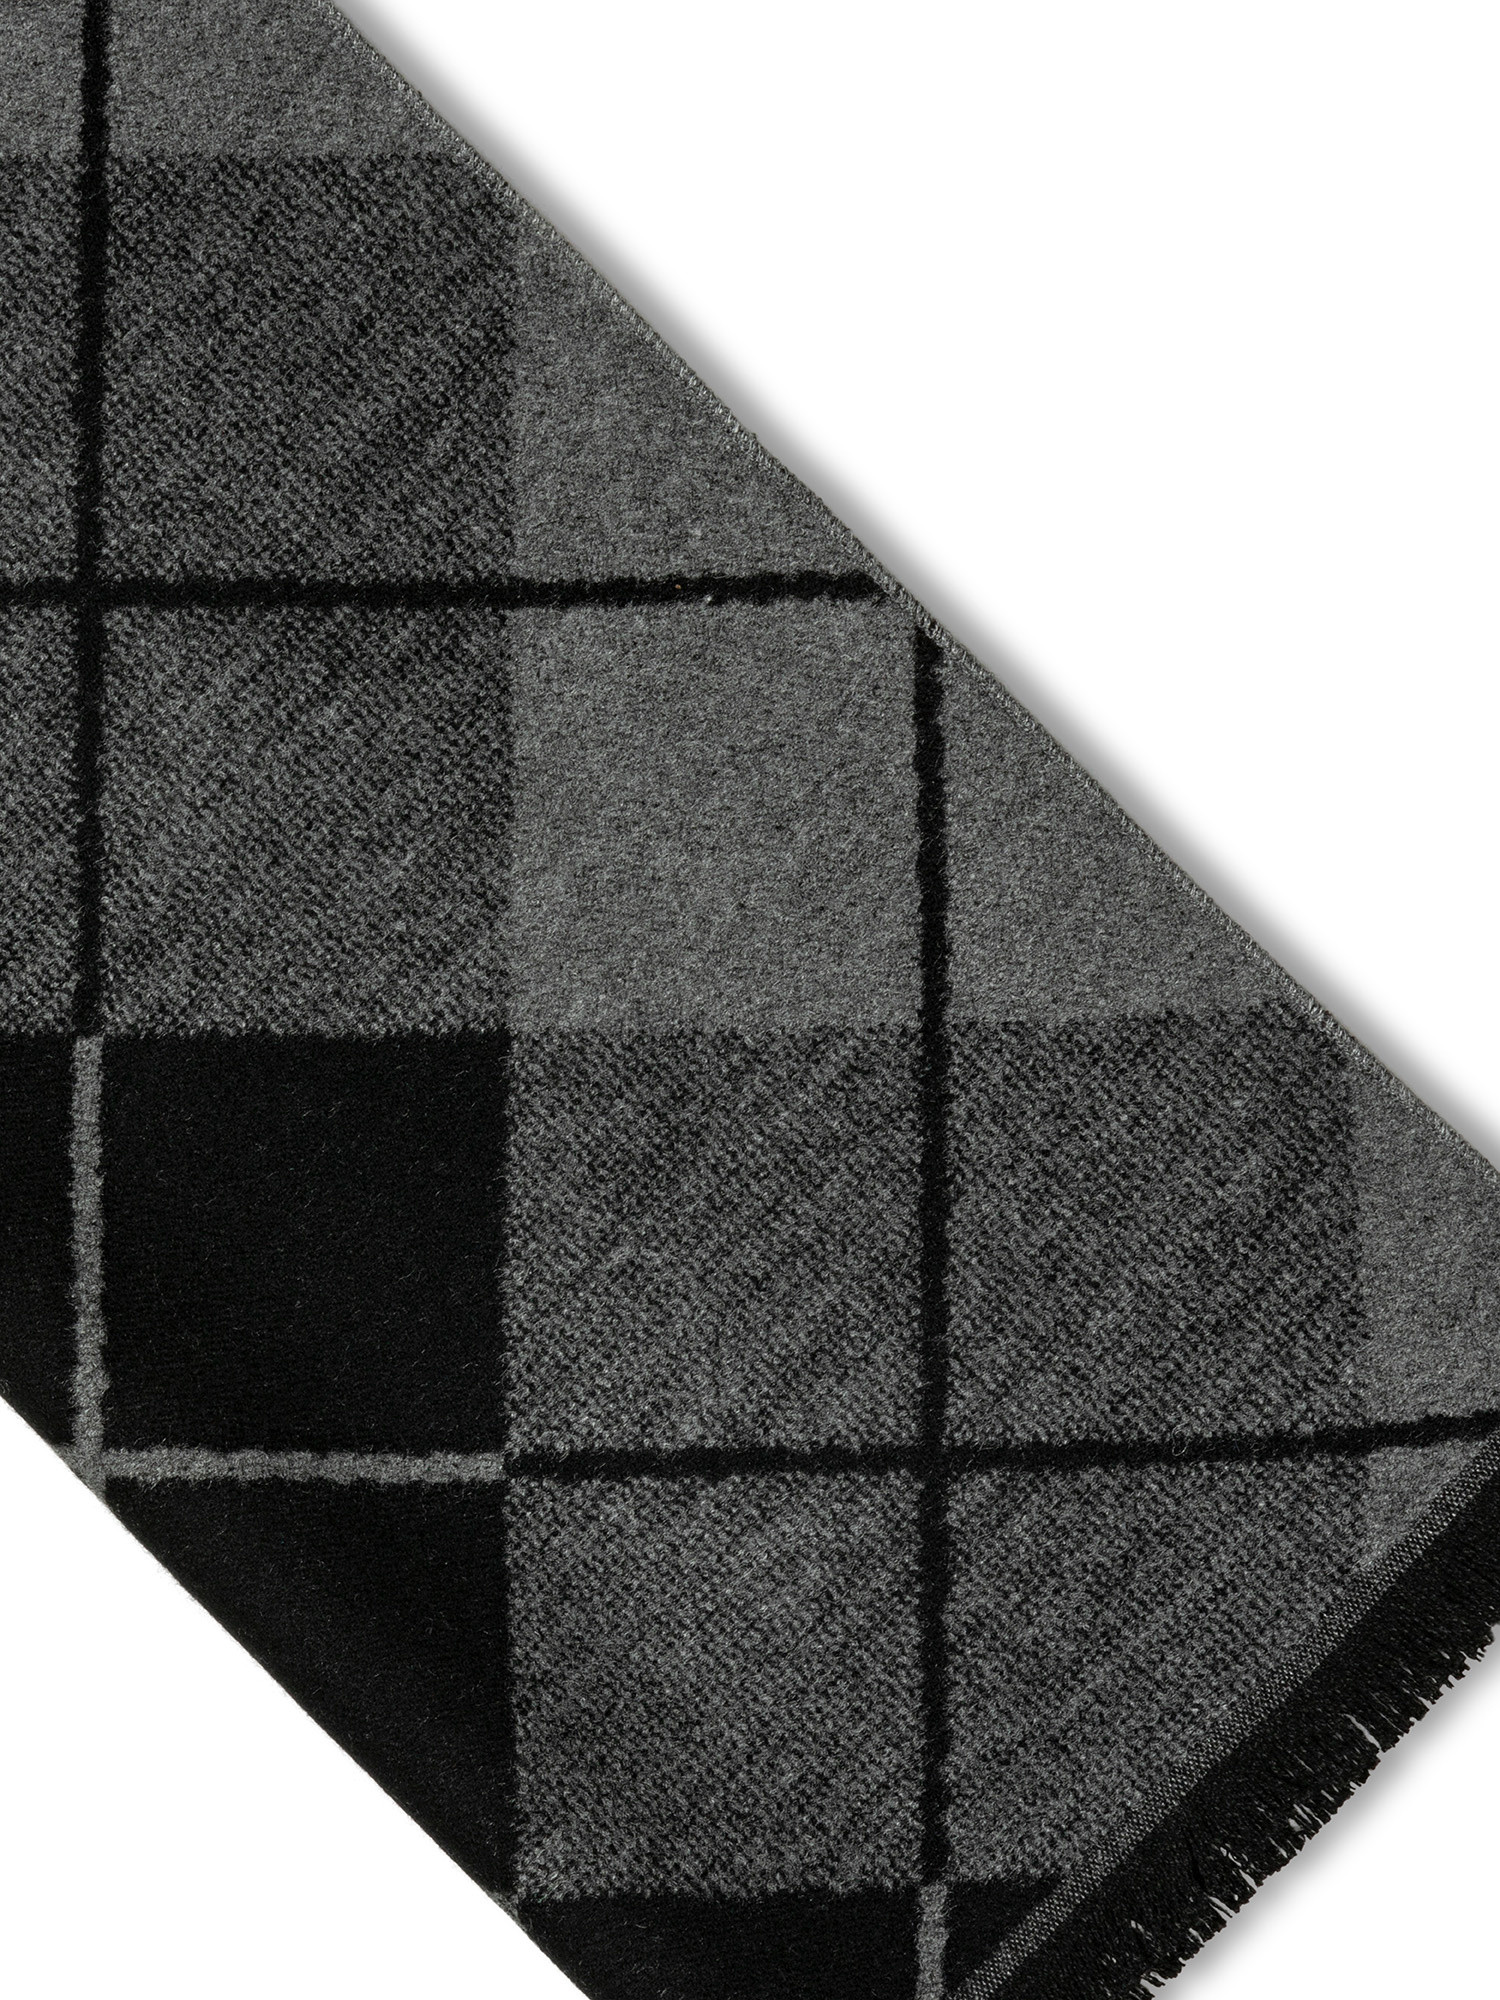 Luca D'Altieri - Diamond-patterned scarf, Black, large image number 1